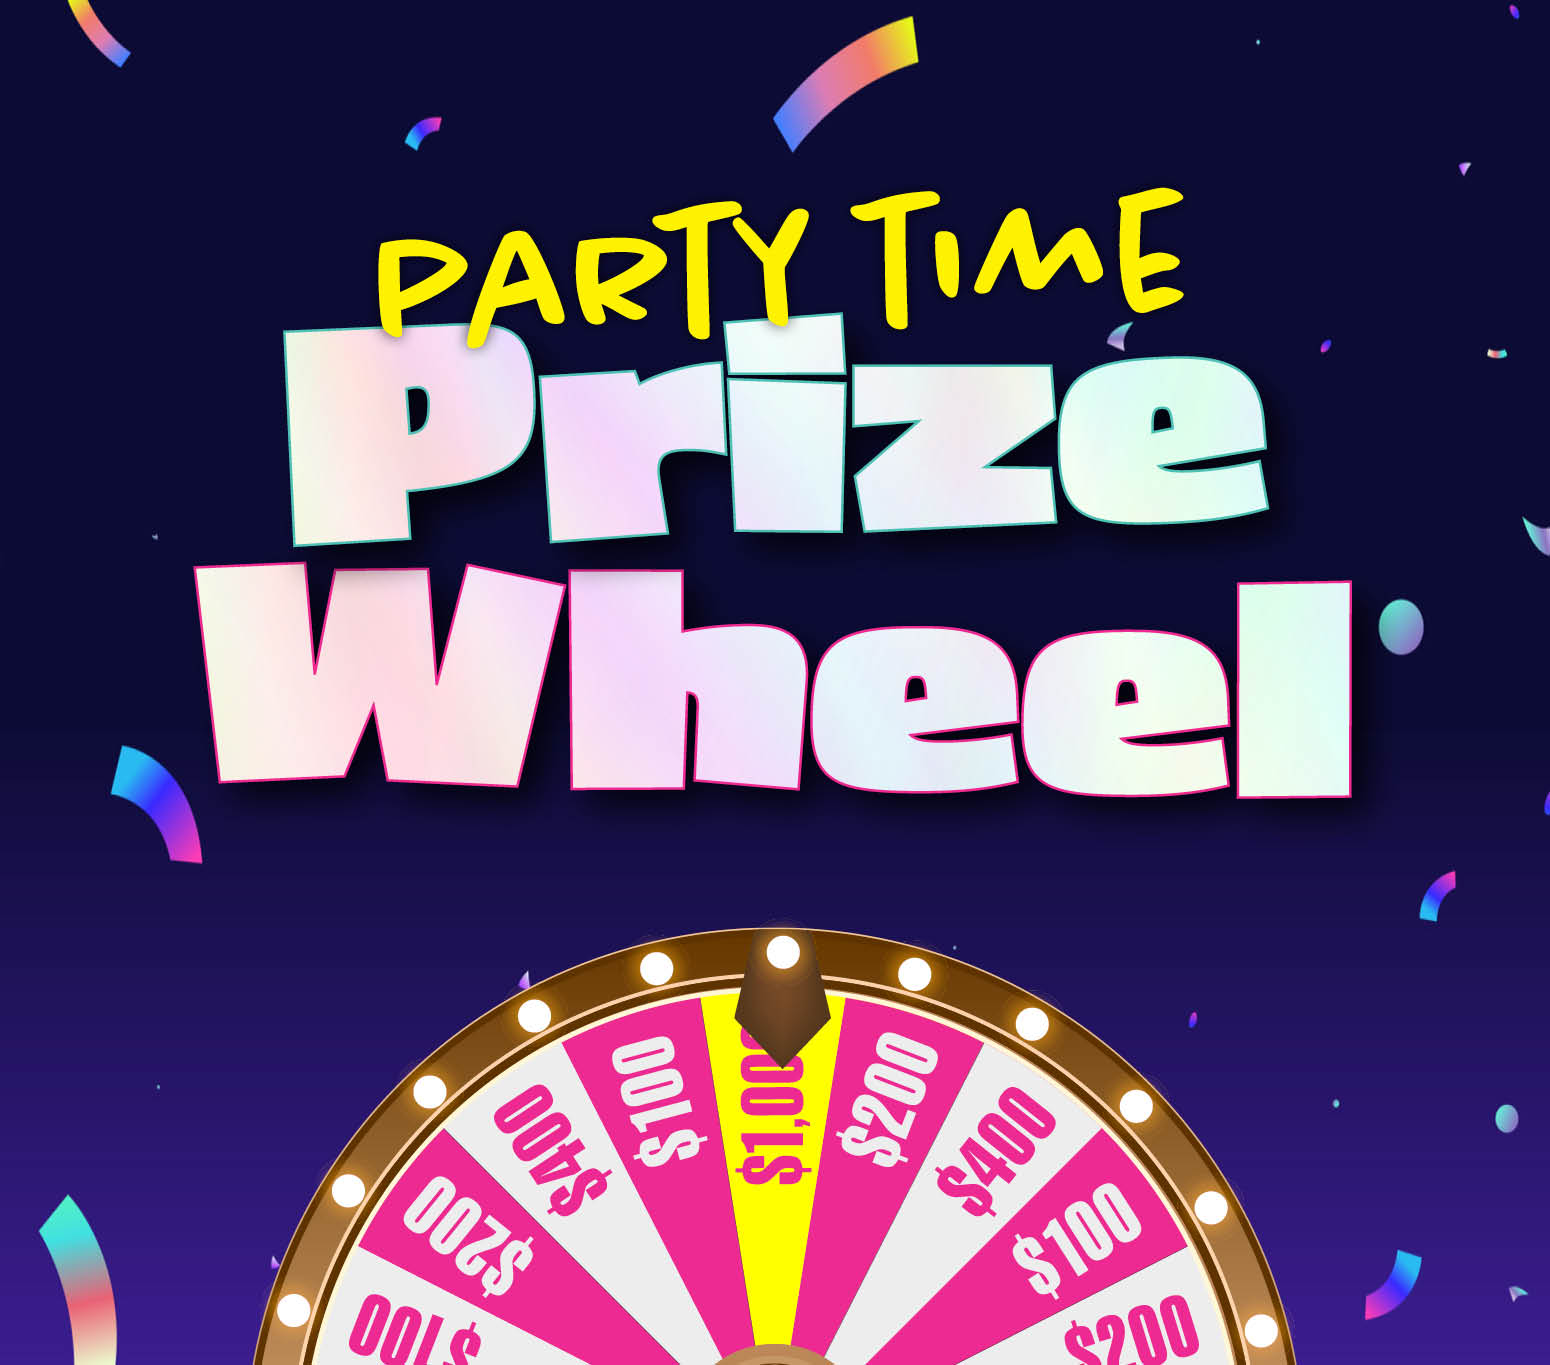 Party Time Prize Wheel